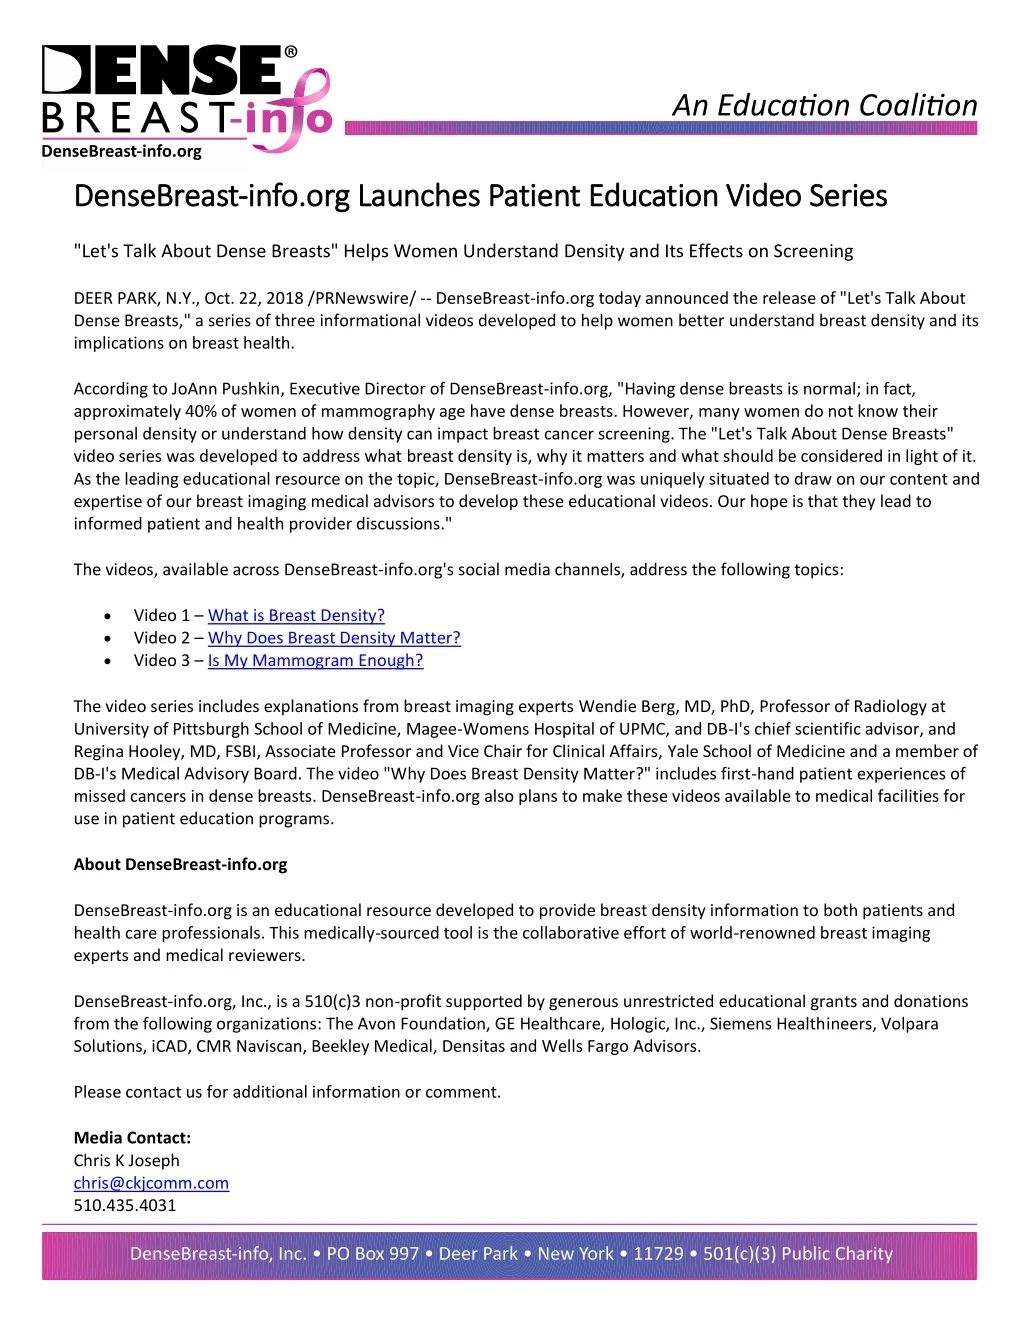 densebreast densebreast info org launches patient